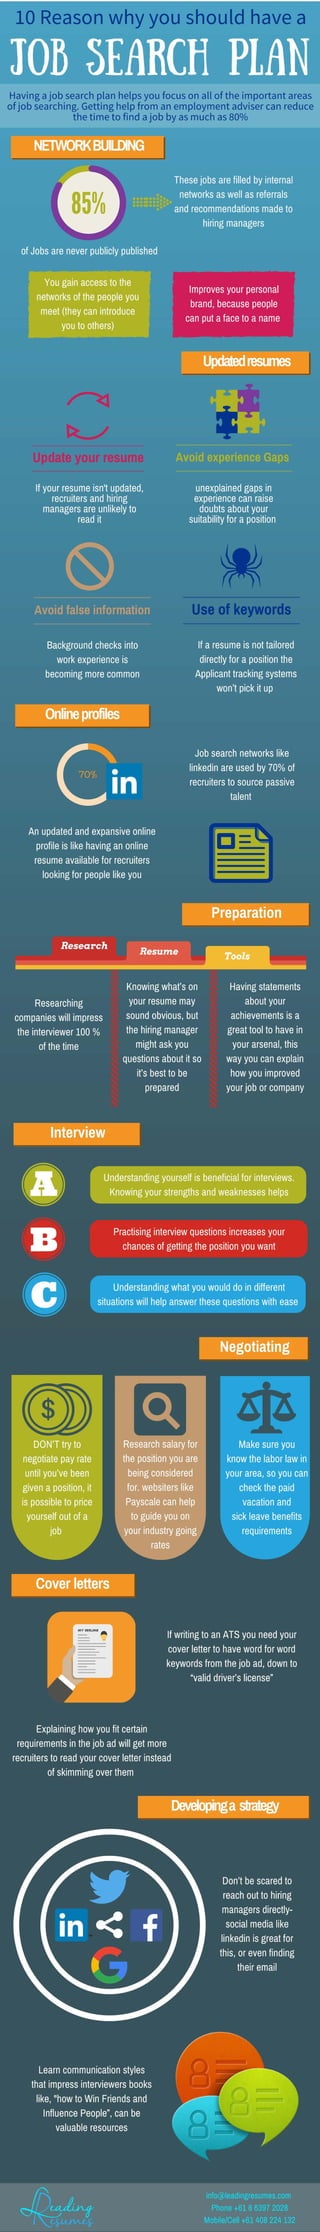 10 reasons for having a job search plan